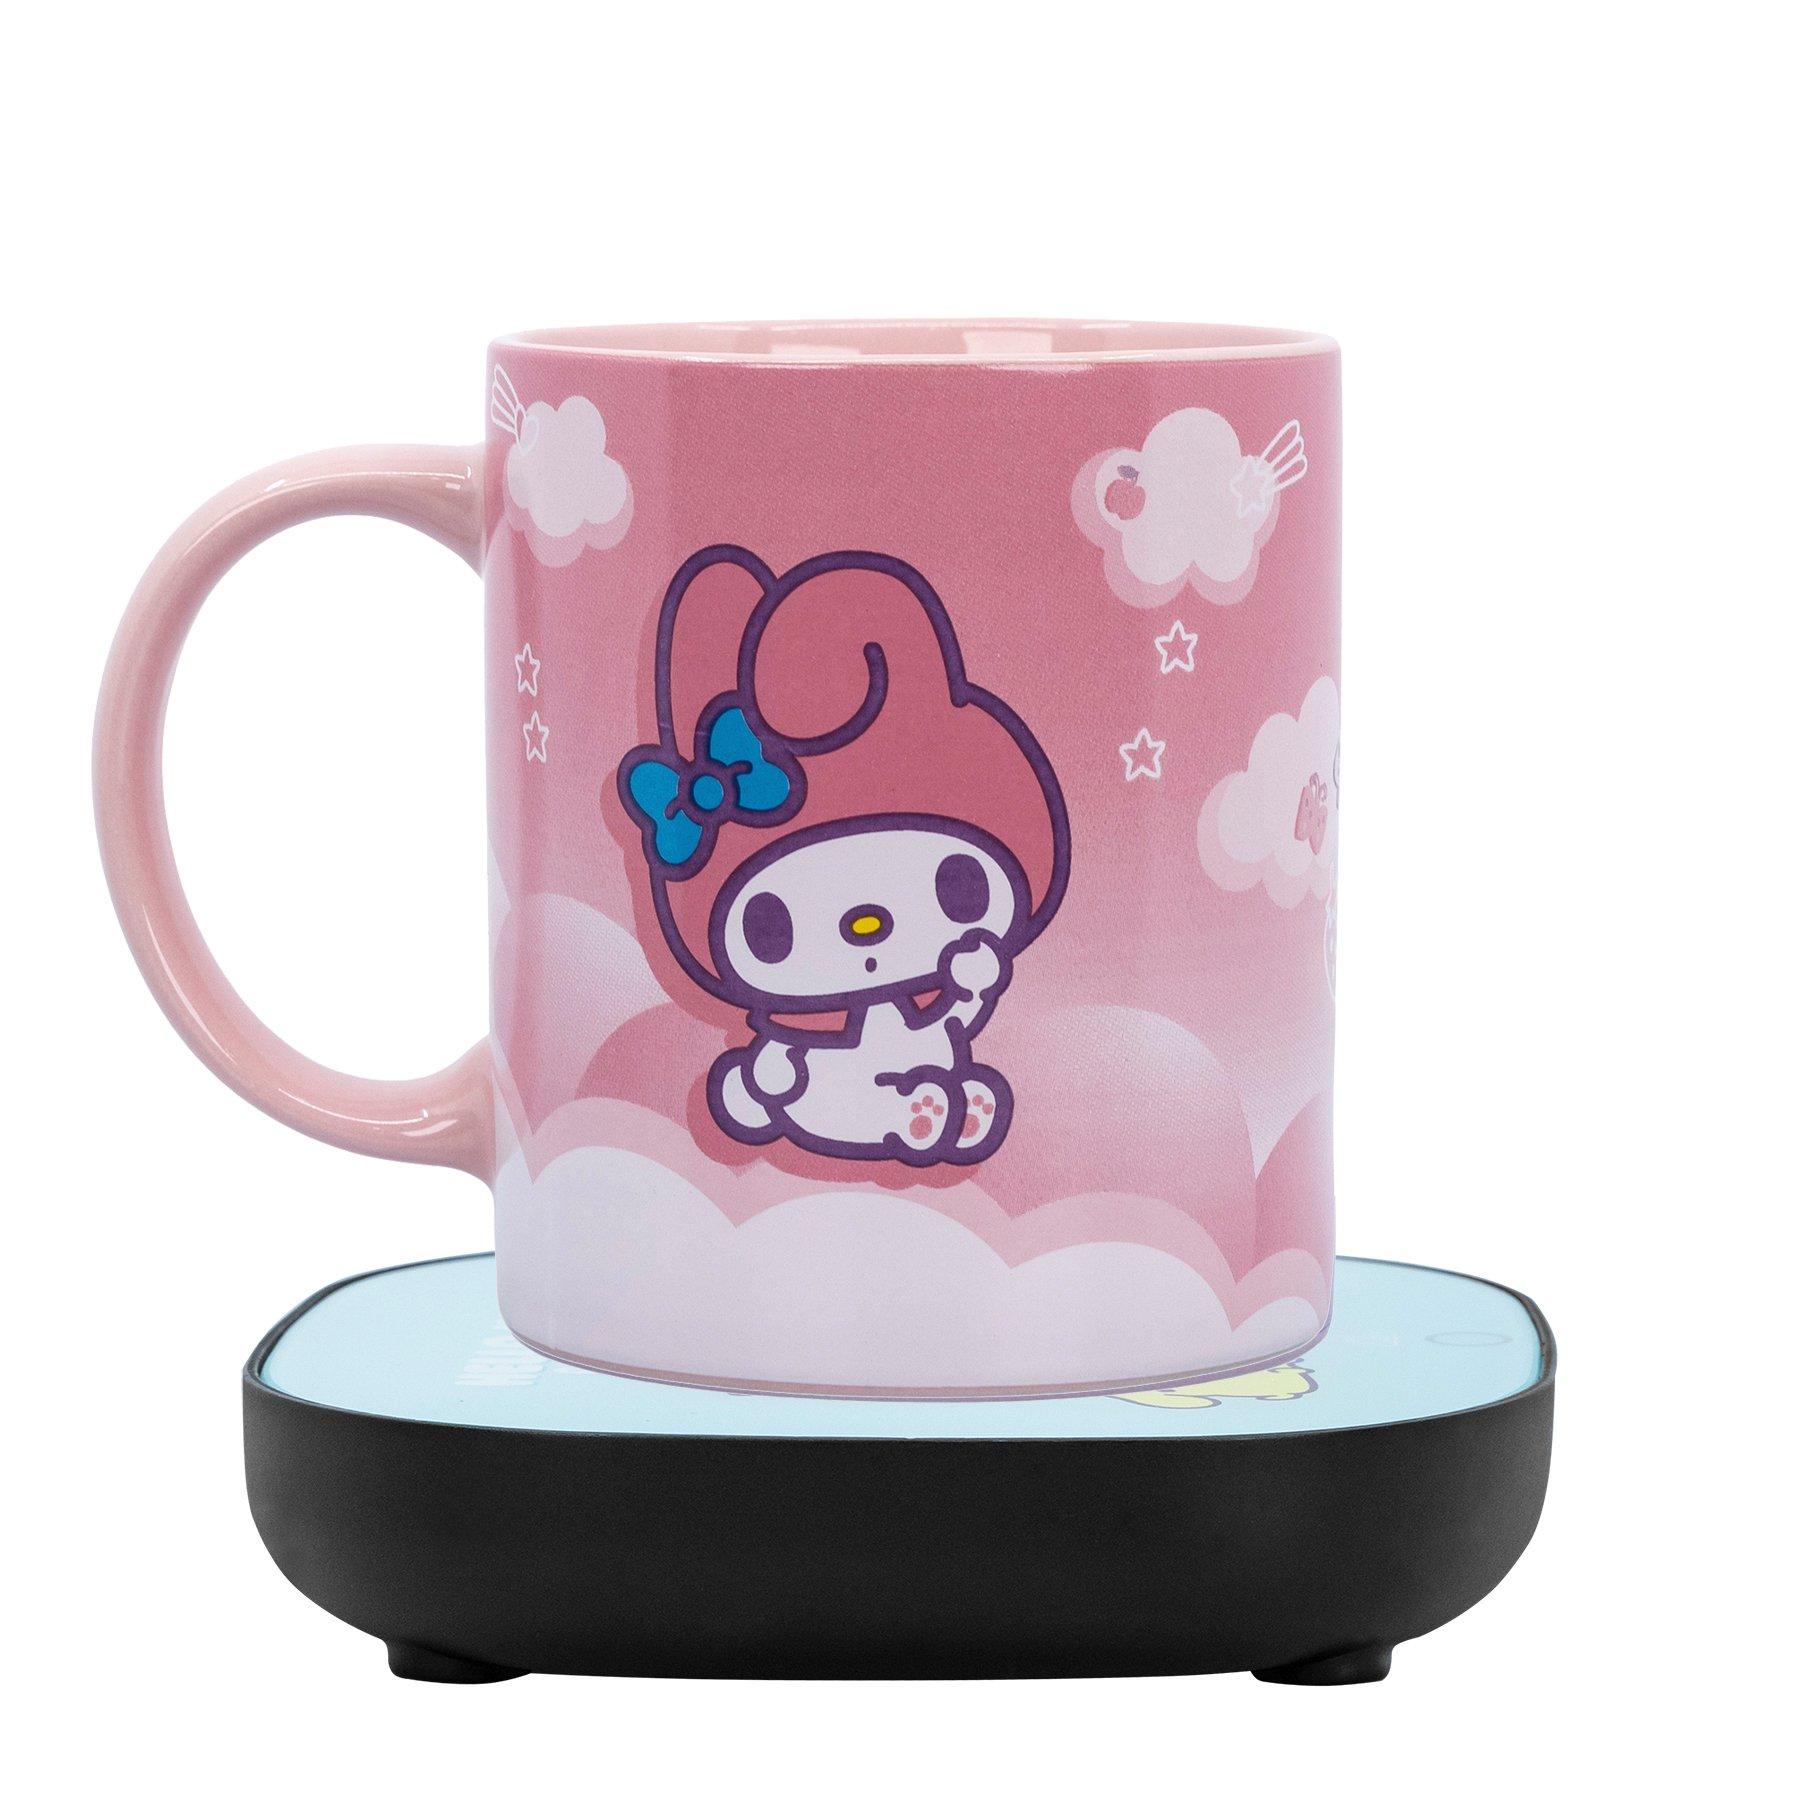 https://media.gamestop.com/i/gamestop/20005614_ALT01/Hello-Kitty-and-Friends-My-Melody-Mug-Warmer-with-Mug-..?$pdp$